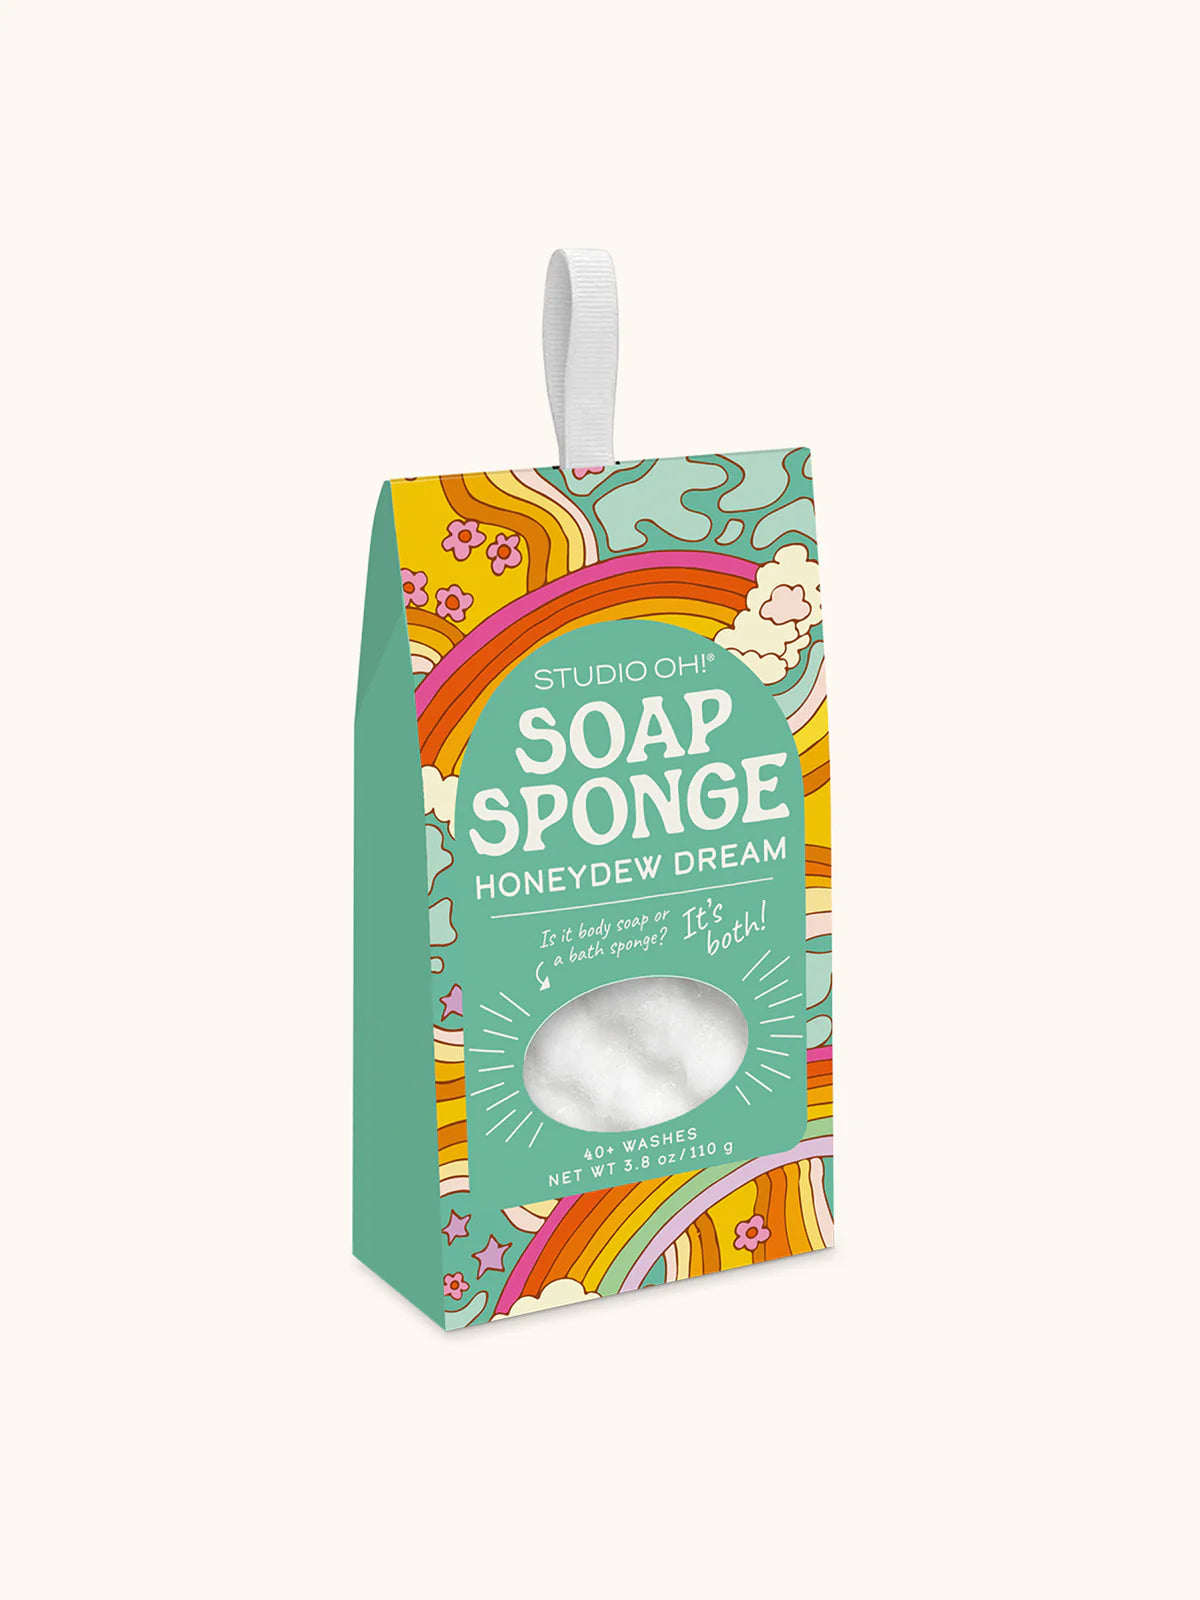 Happy-Go-Lucky Days Soap Sponge